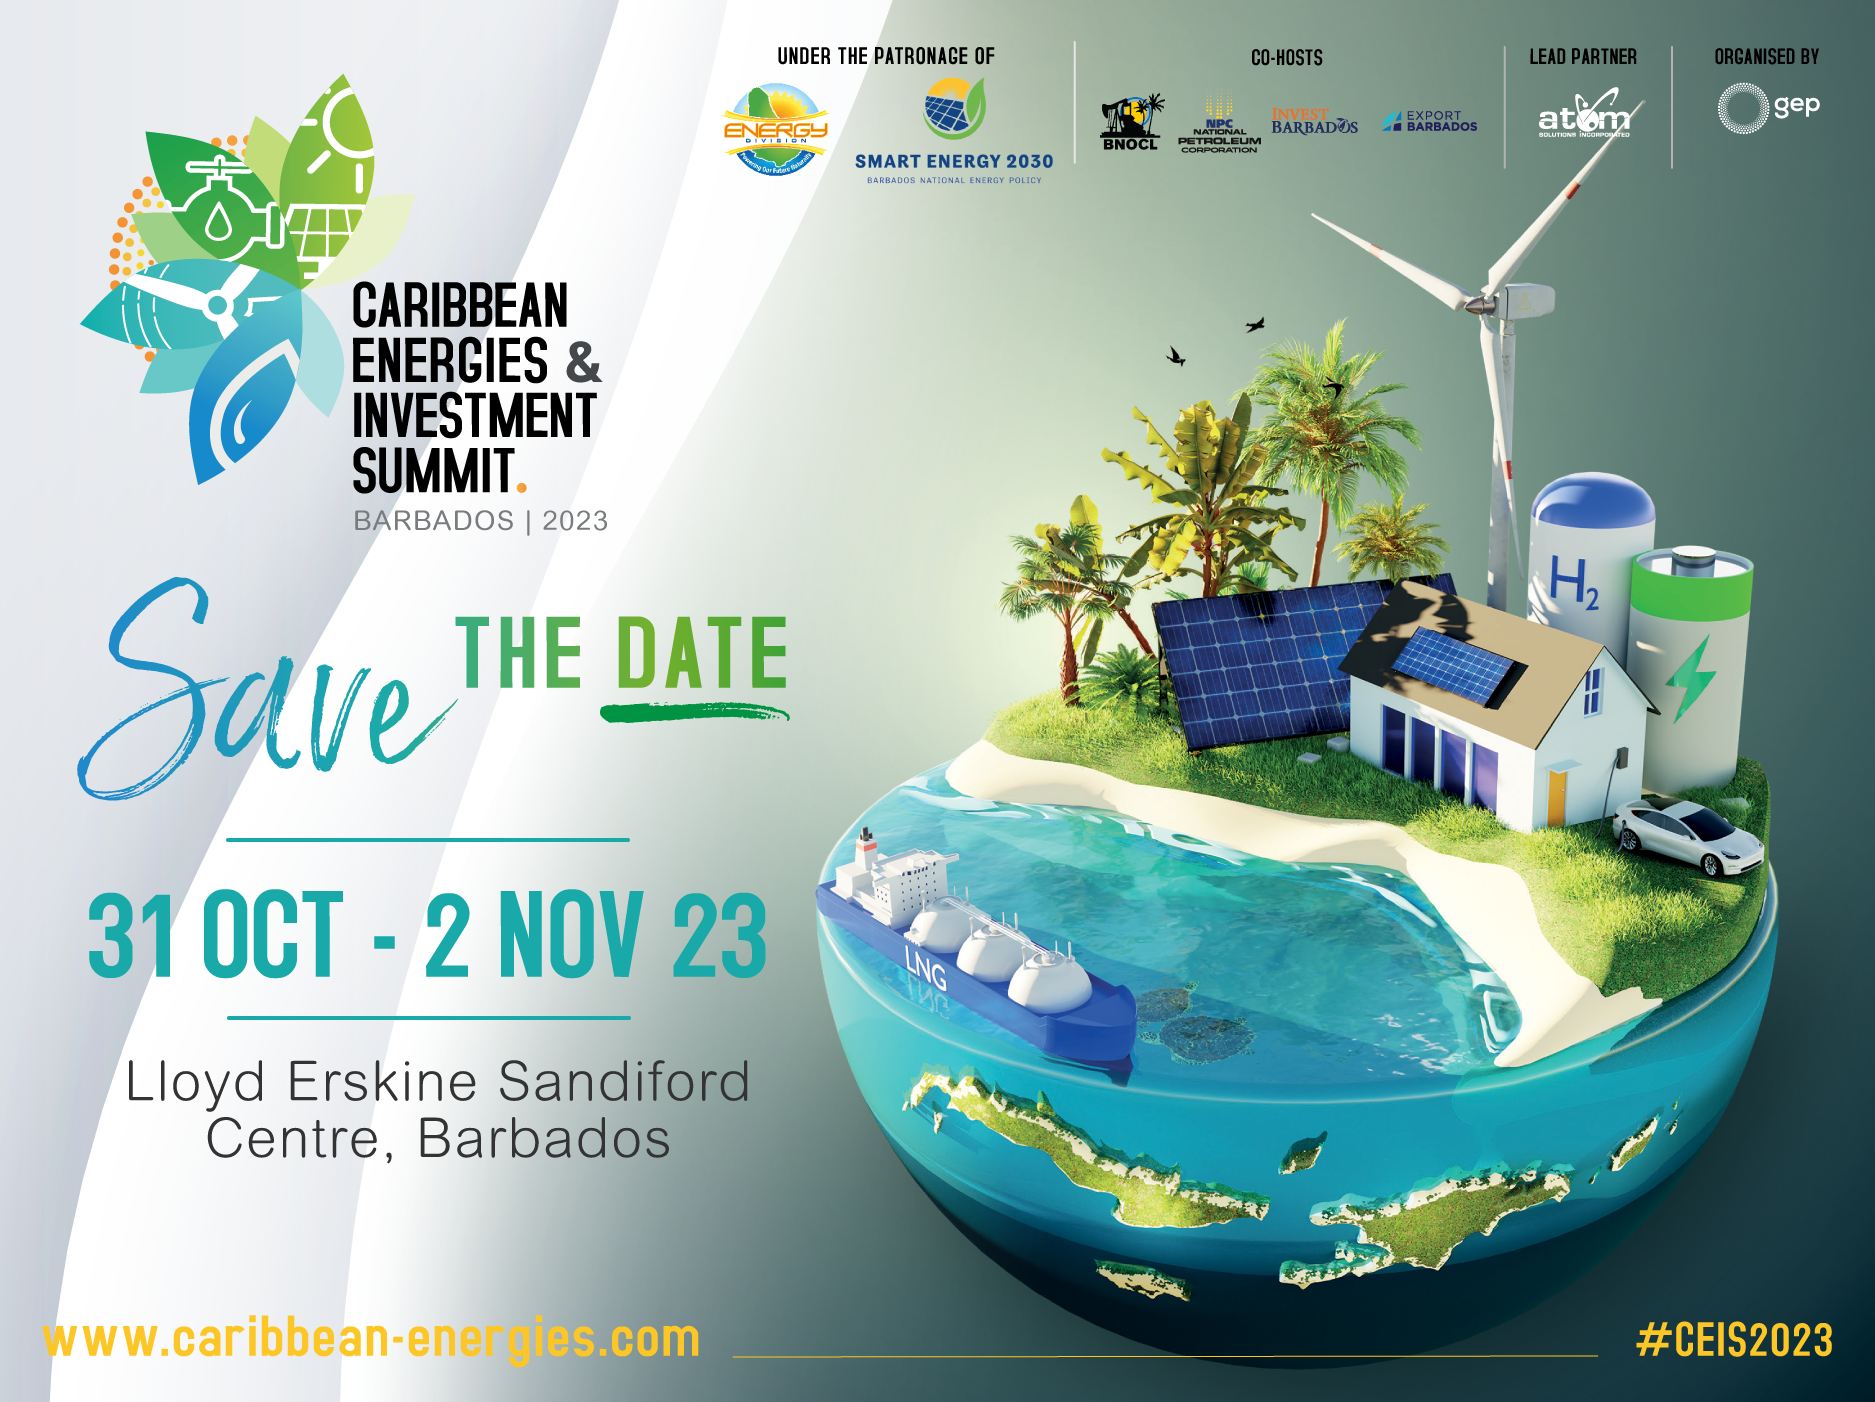 Caribbean Energies & Investment Summit